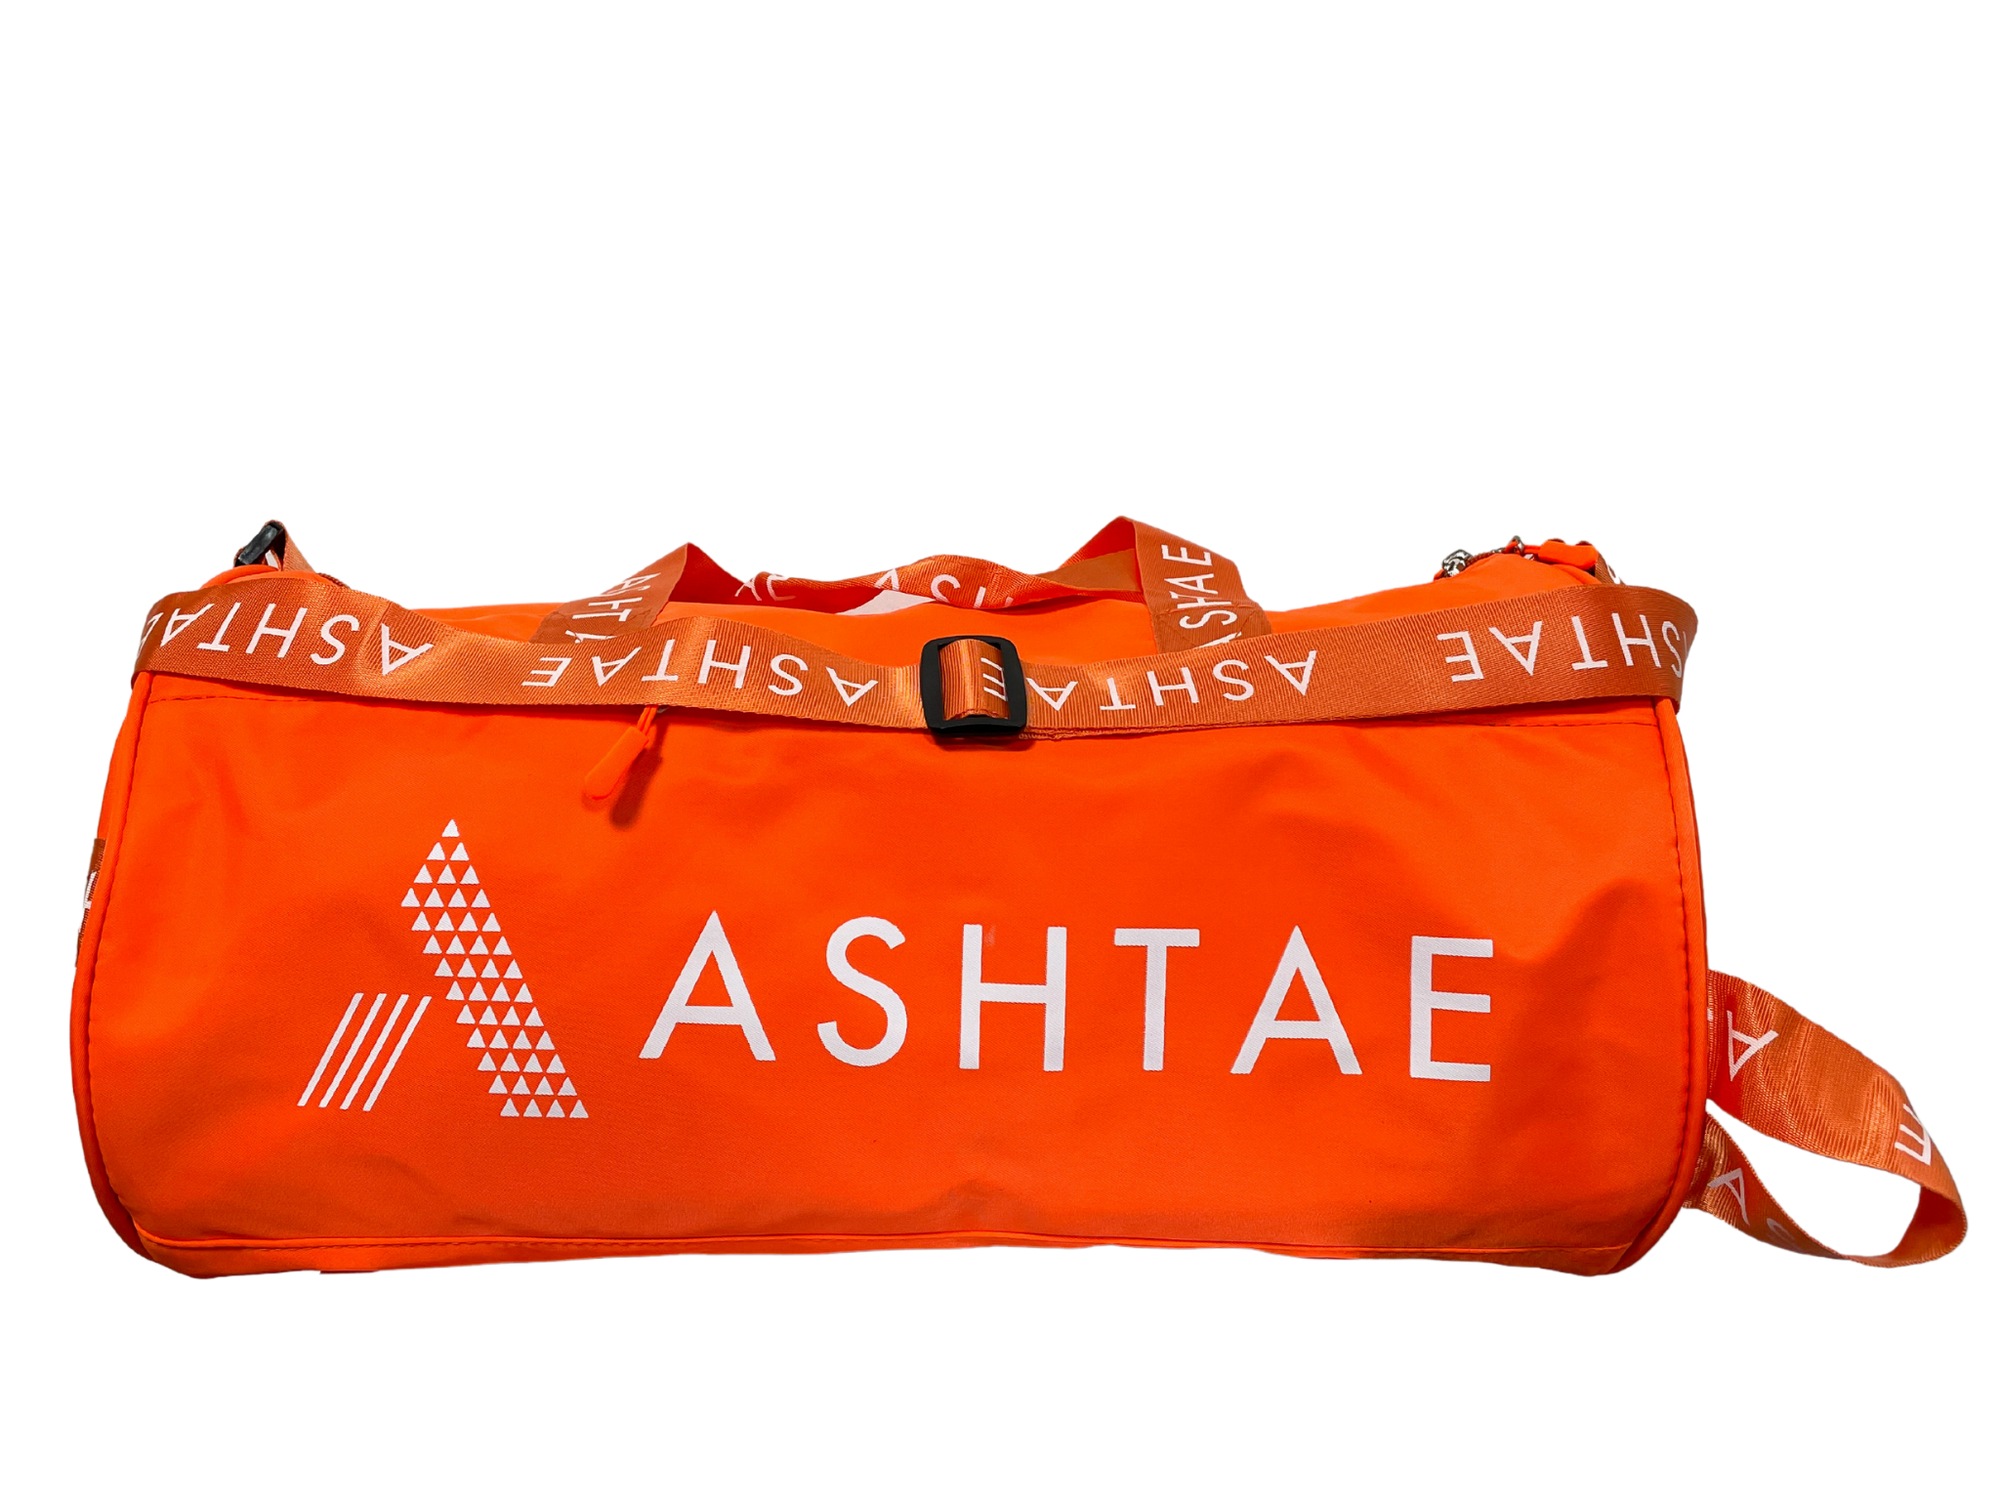 Ashtae Travel Duffel Bag